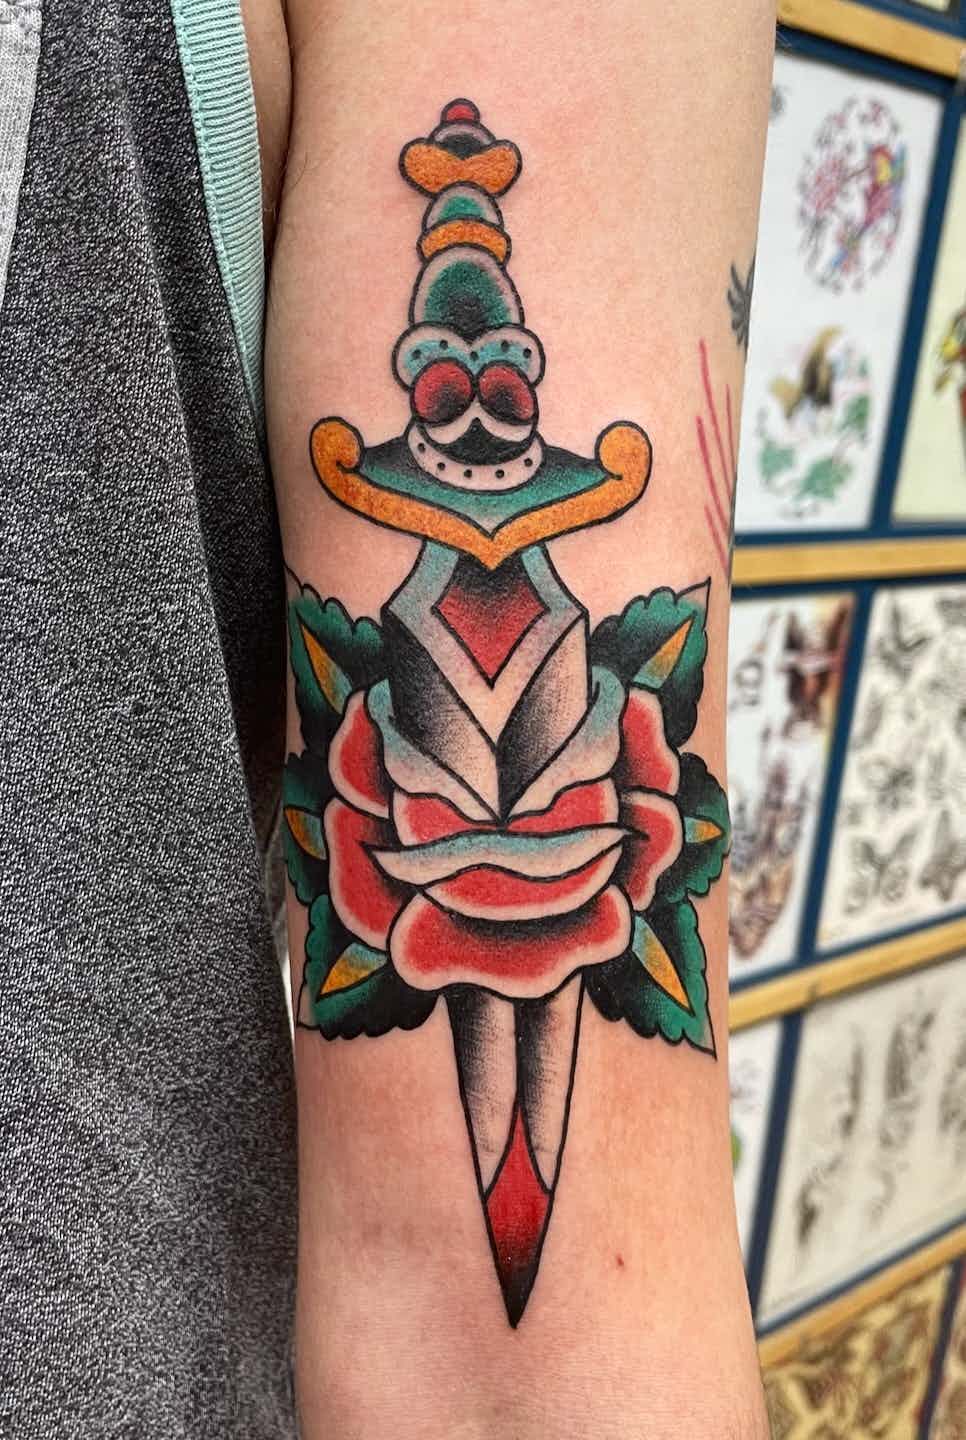 Dagger rose tattoo